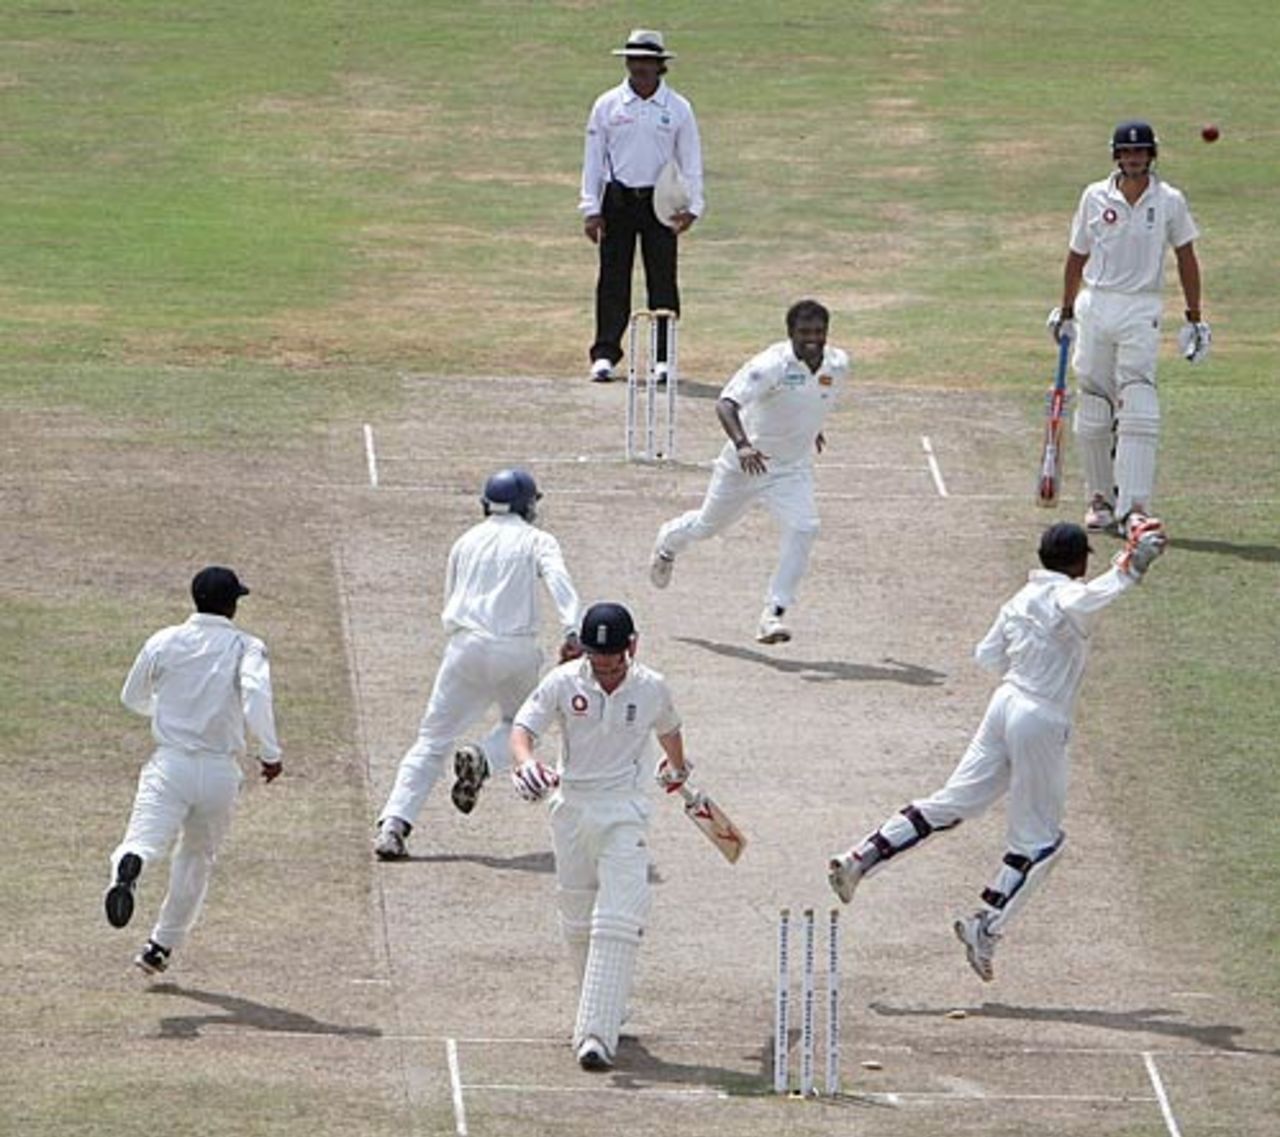 Muttiah Muralitharan celebrates the wicket of Paul Collingwood, Sri Lanka v England, 3rd Test, Galle, 5th day, December 22 2007